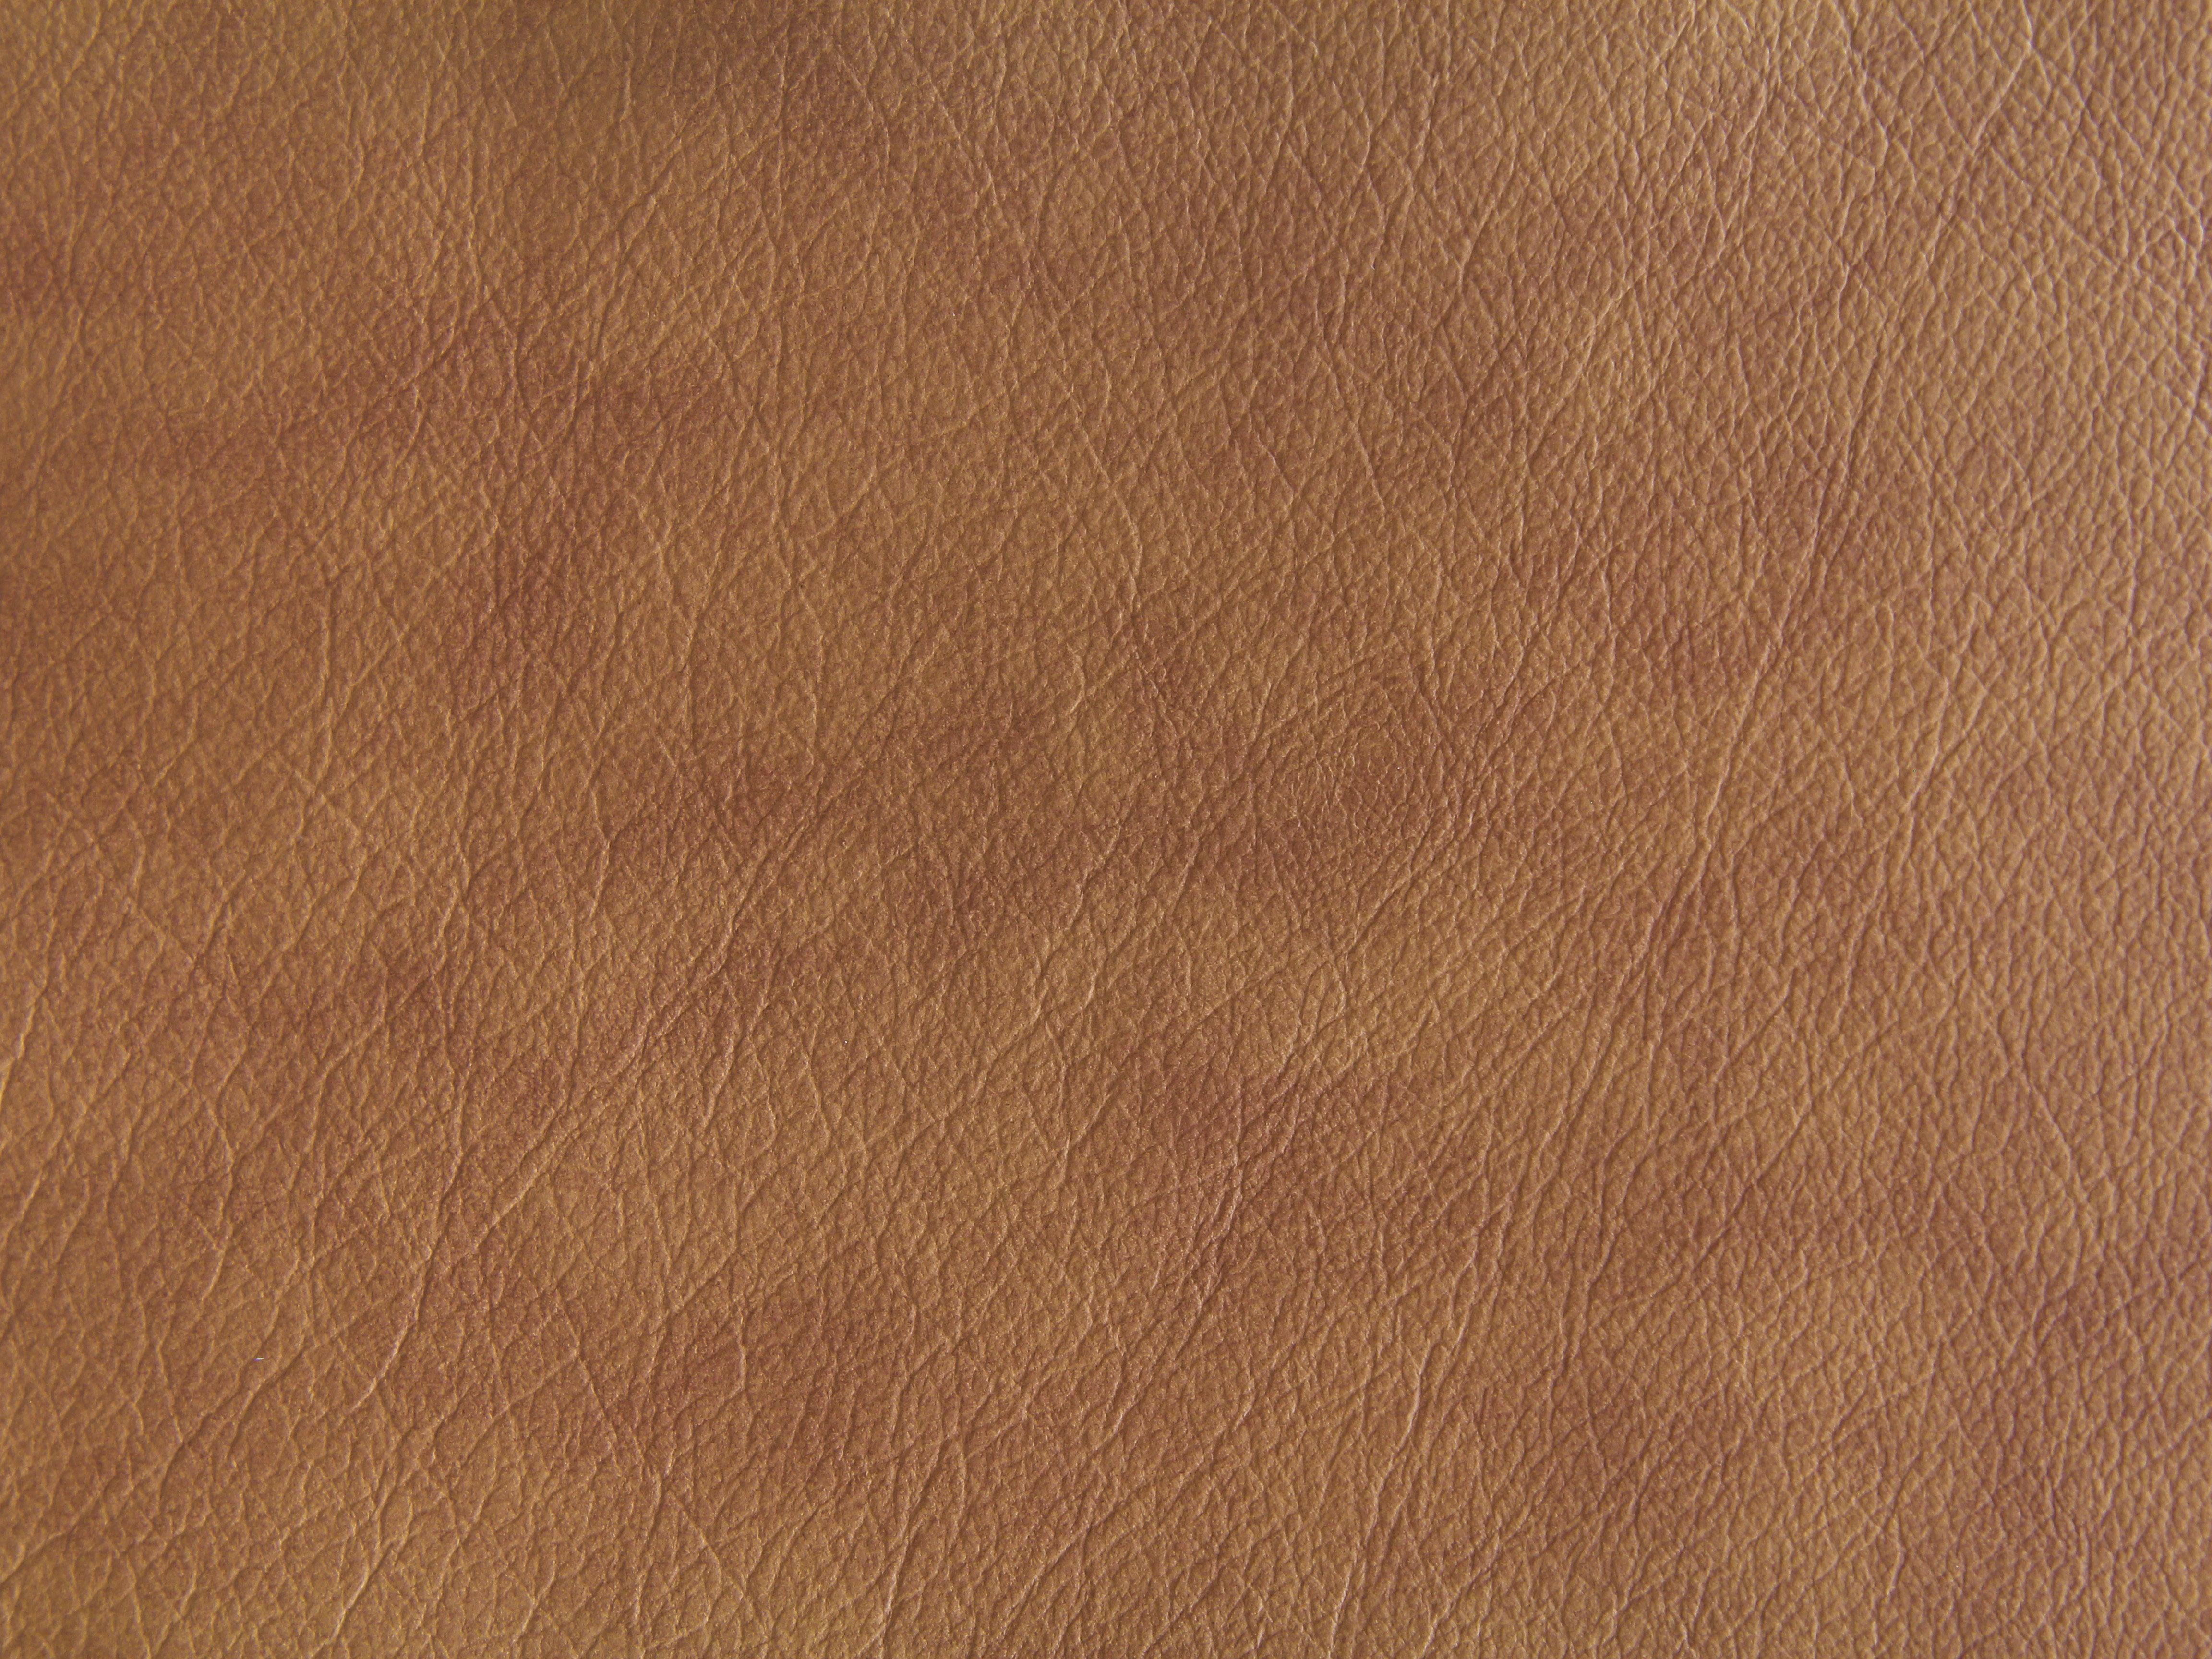 Texturex Leather Textures Coudy Brown Texture Wallpaper